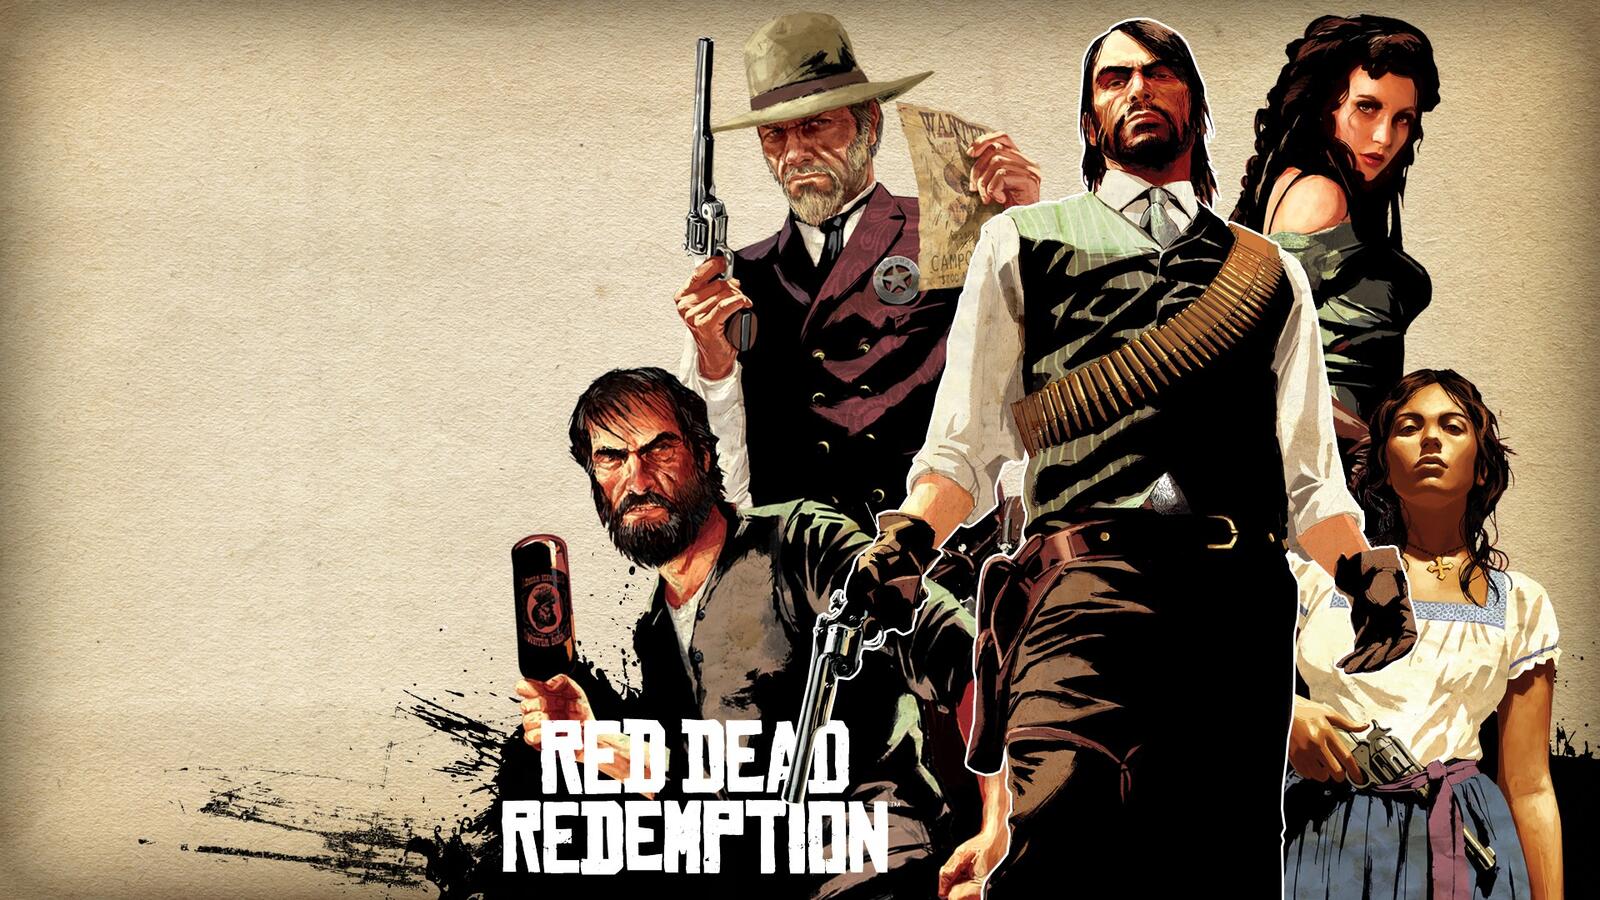 Wallpapers red dead redemption John Marston rockstar games on the desktop